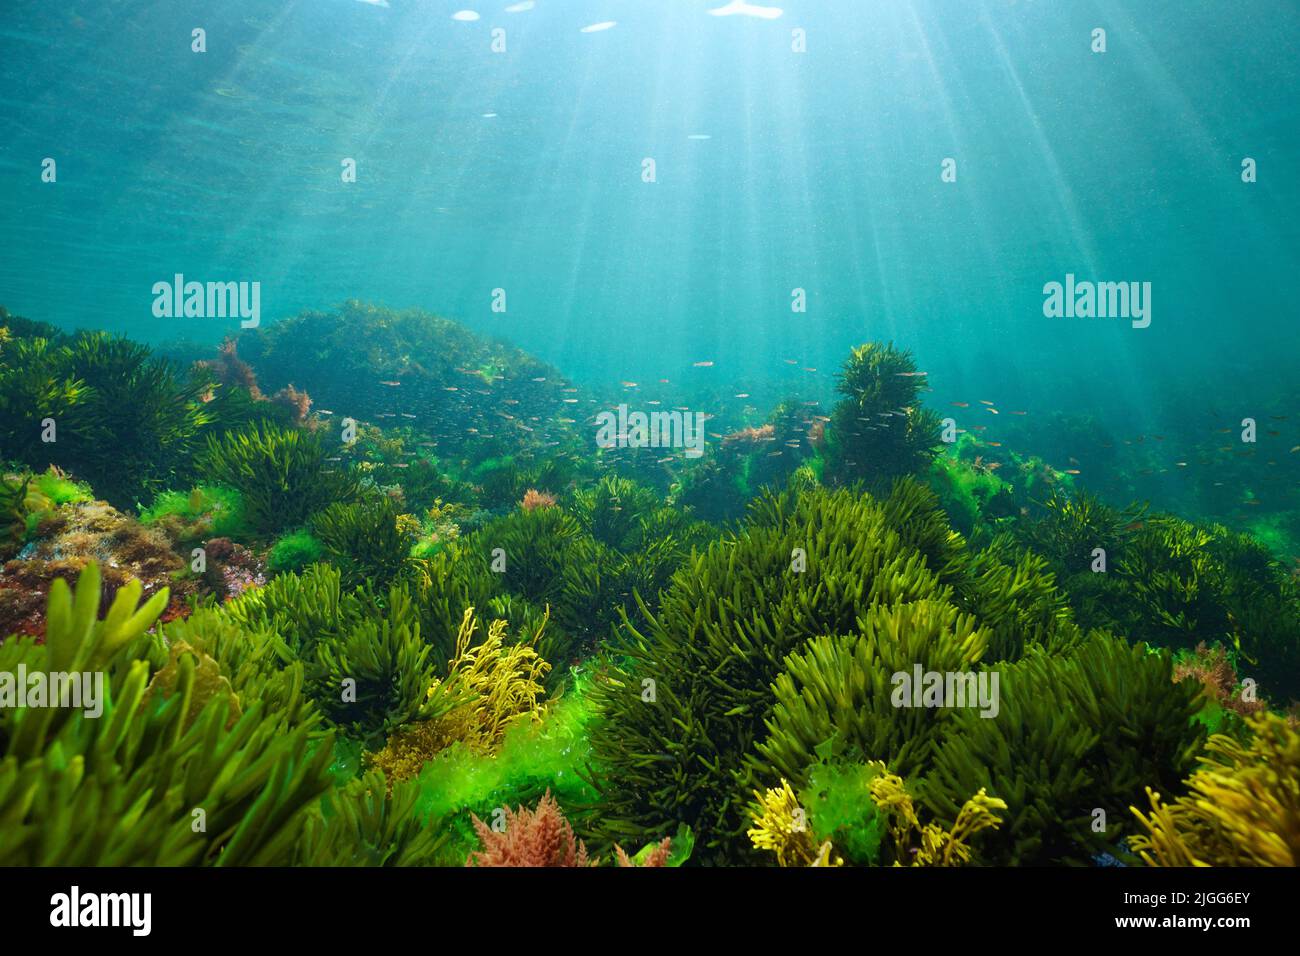 Algae on the ocean floor with natural sunlight, underwater seascape in the Atlantic ocean, Spain, Galicia Stock Photo